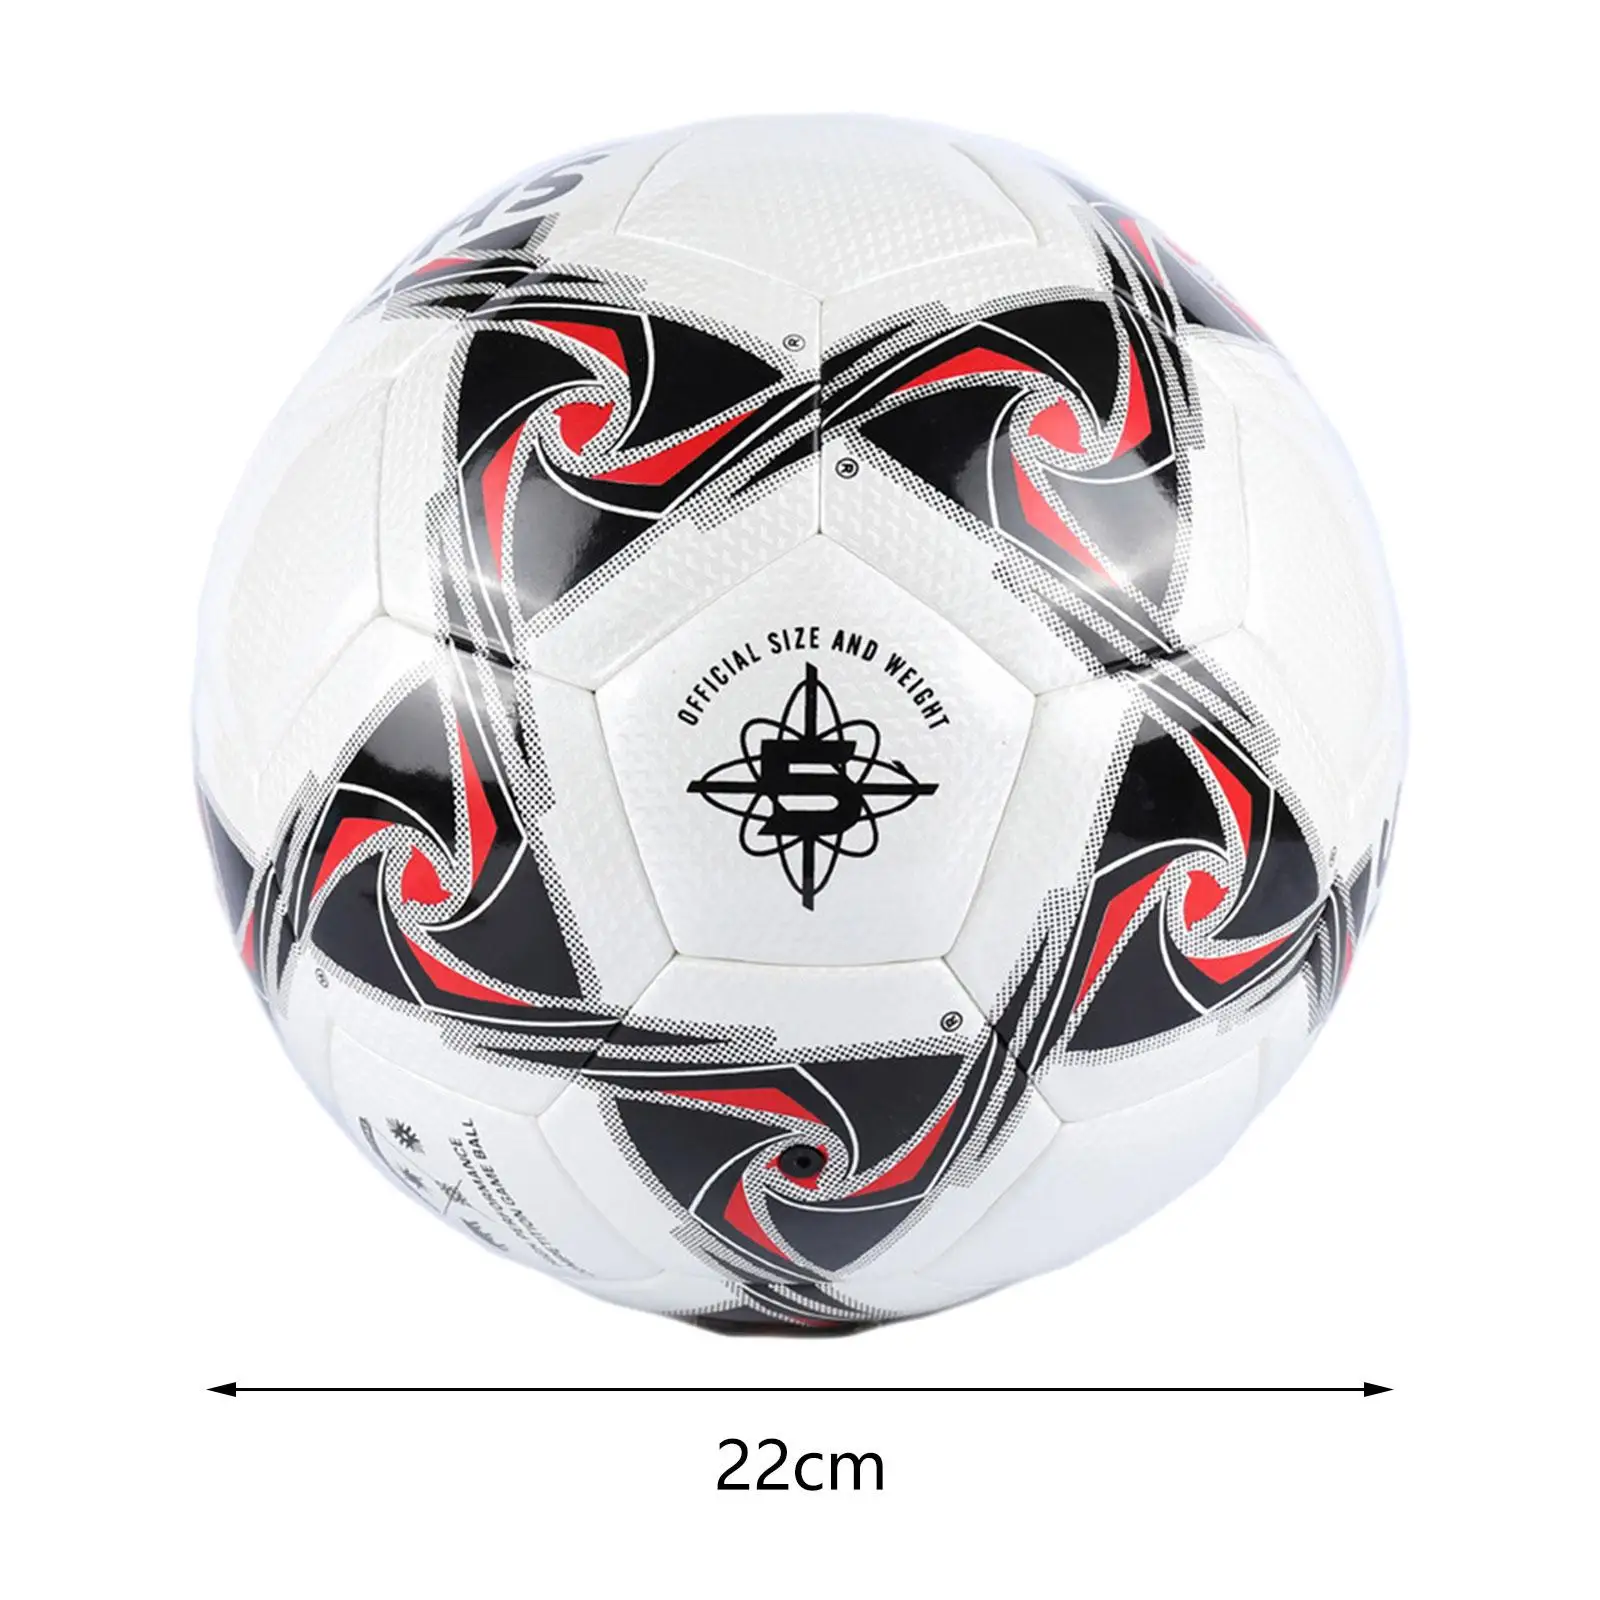 Soccer Ball Professional Futsal Lightweight PU Size 5 Premium Football Ball for Kids and Adults Child Boy and Girl Players Match